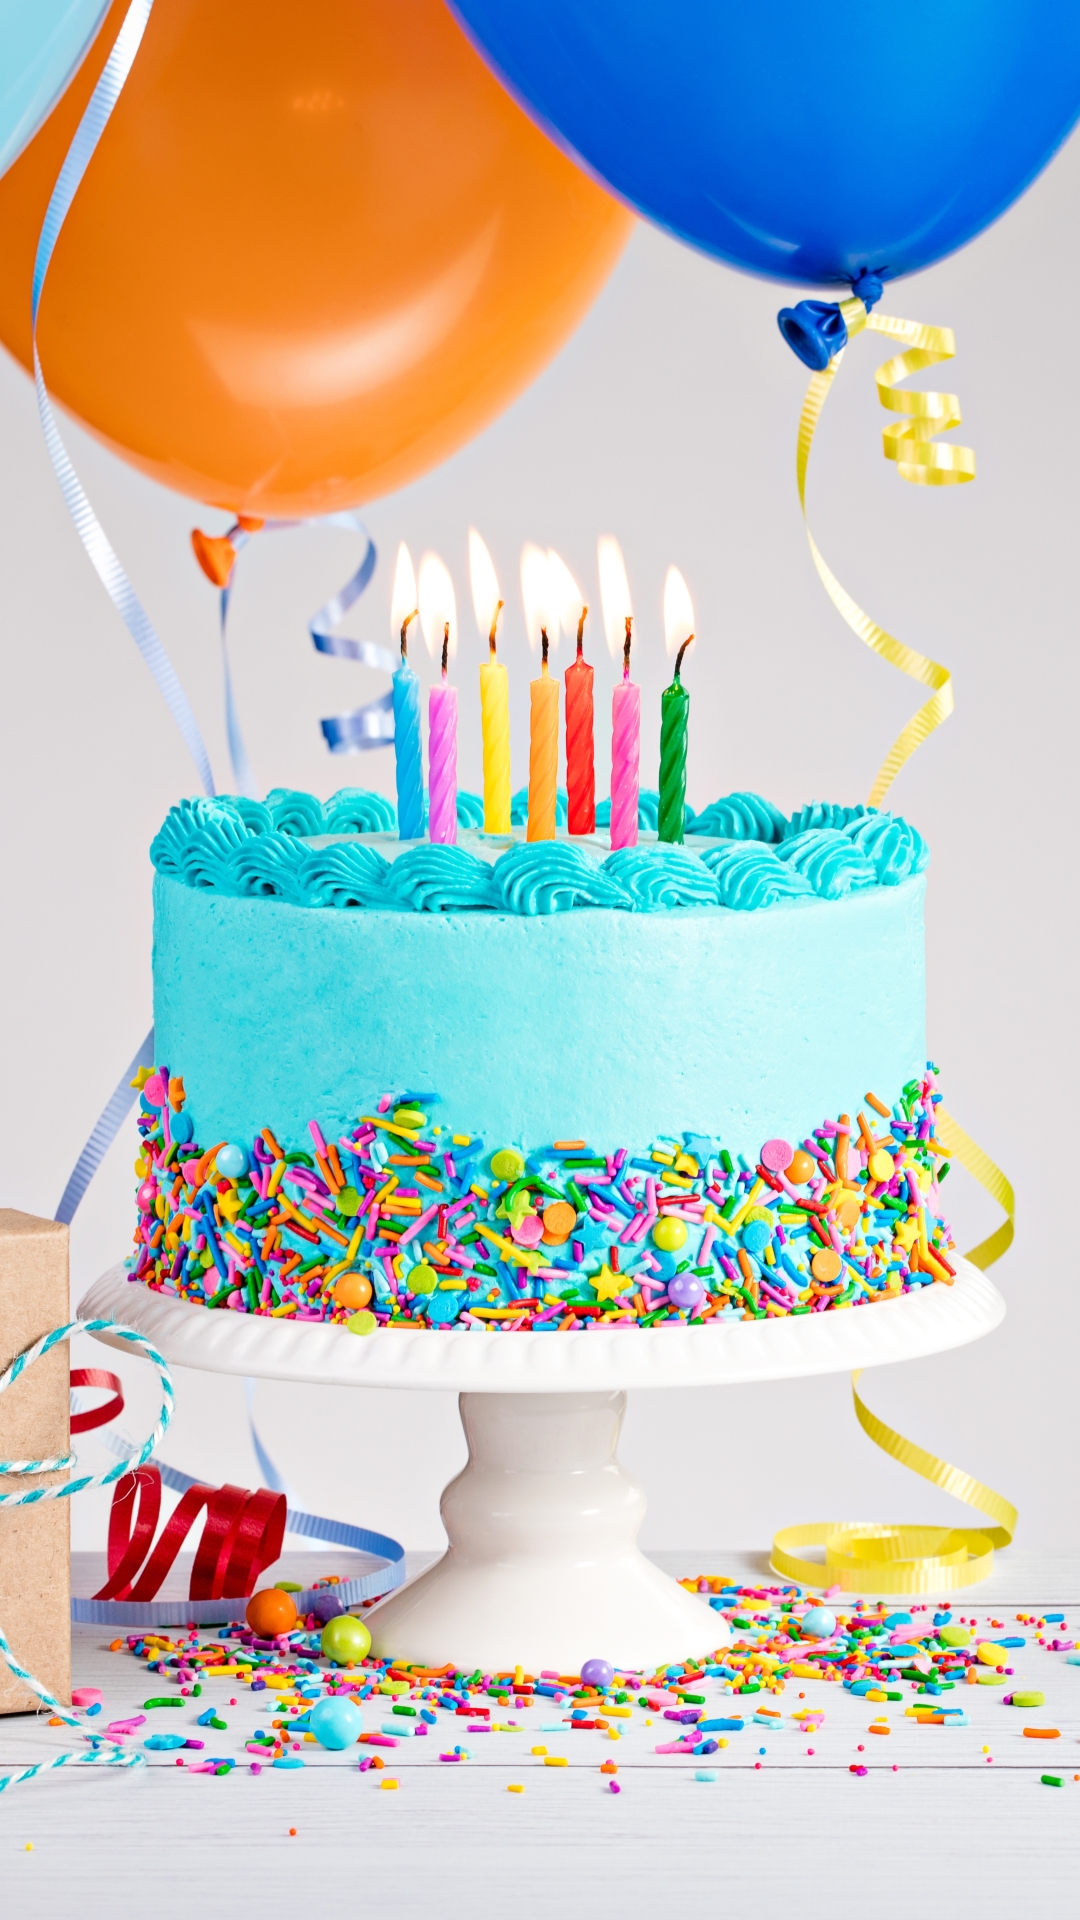 Handy-Wallpaper Feiertage, Gebäck, Kuchen, Ballon, Kerze, Feier, Geburtstag kostenlos herunterladen.